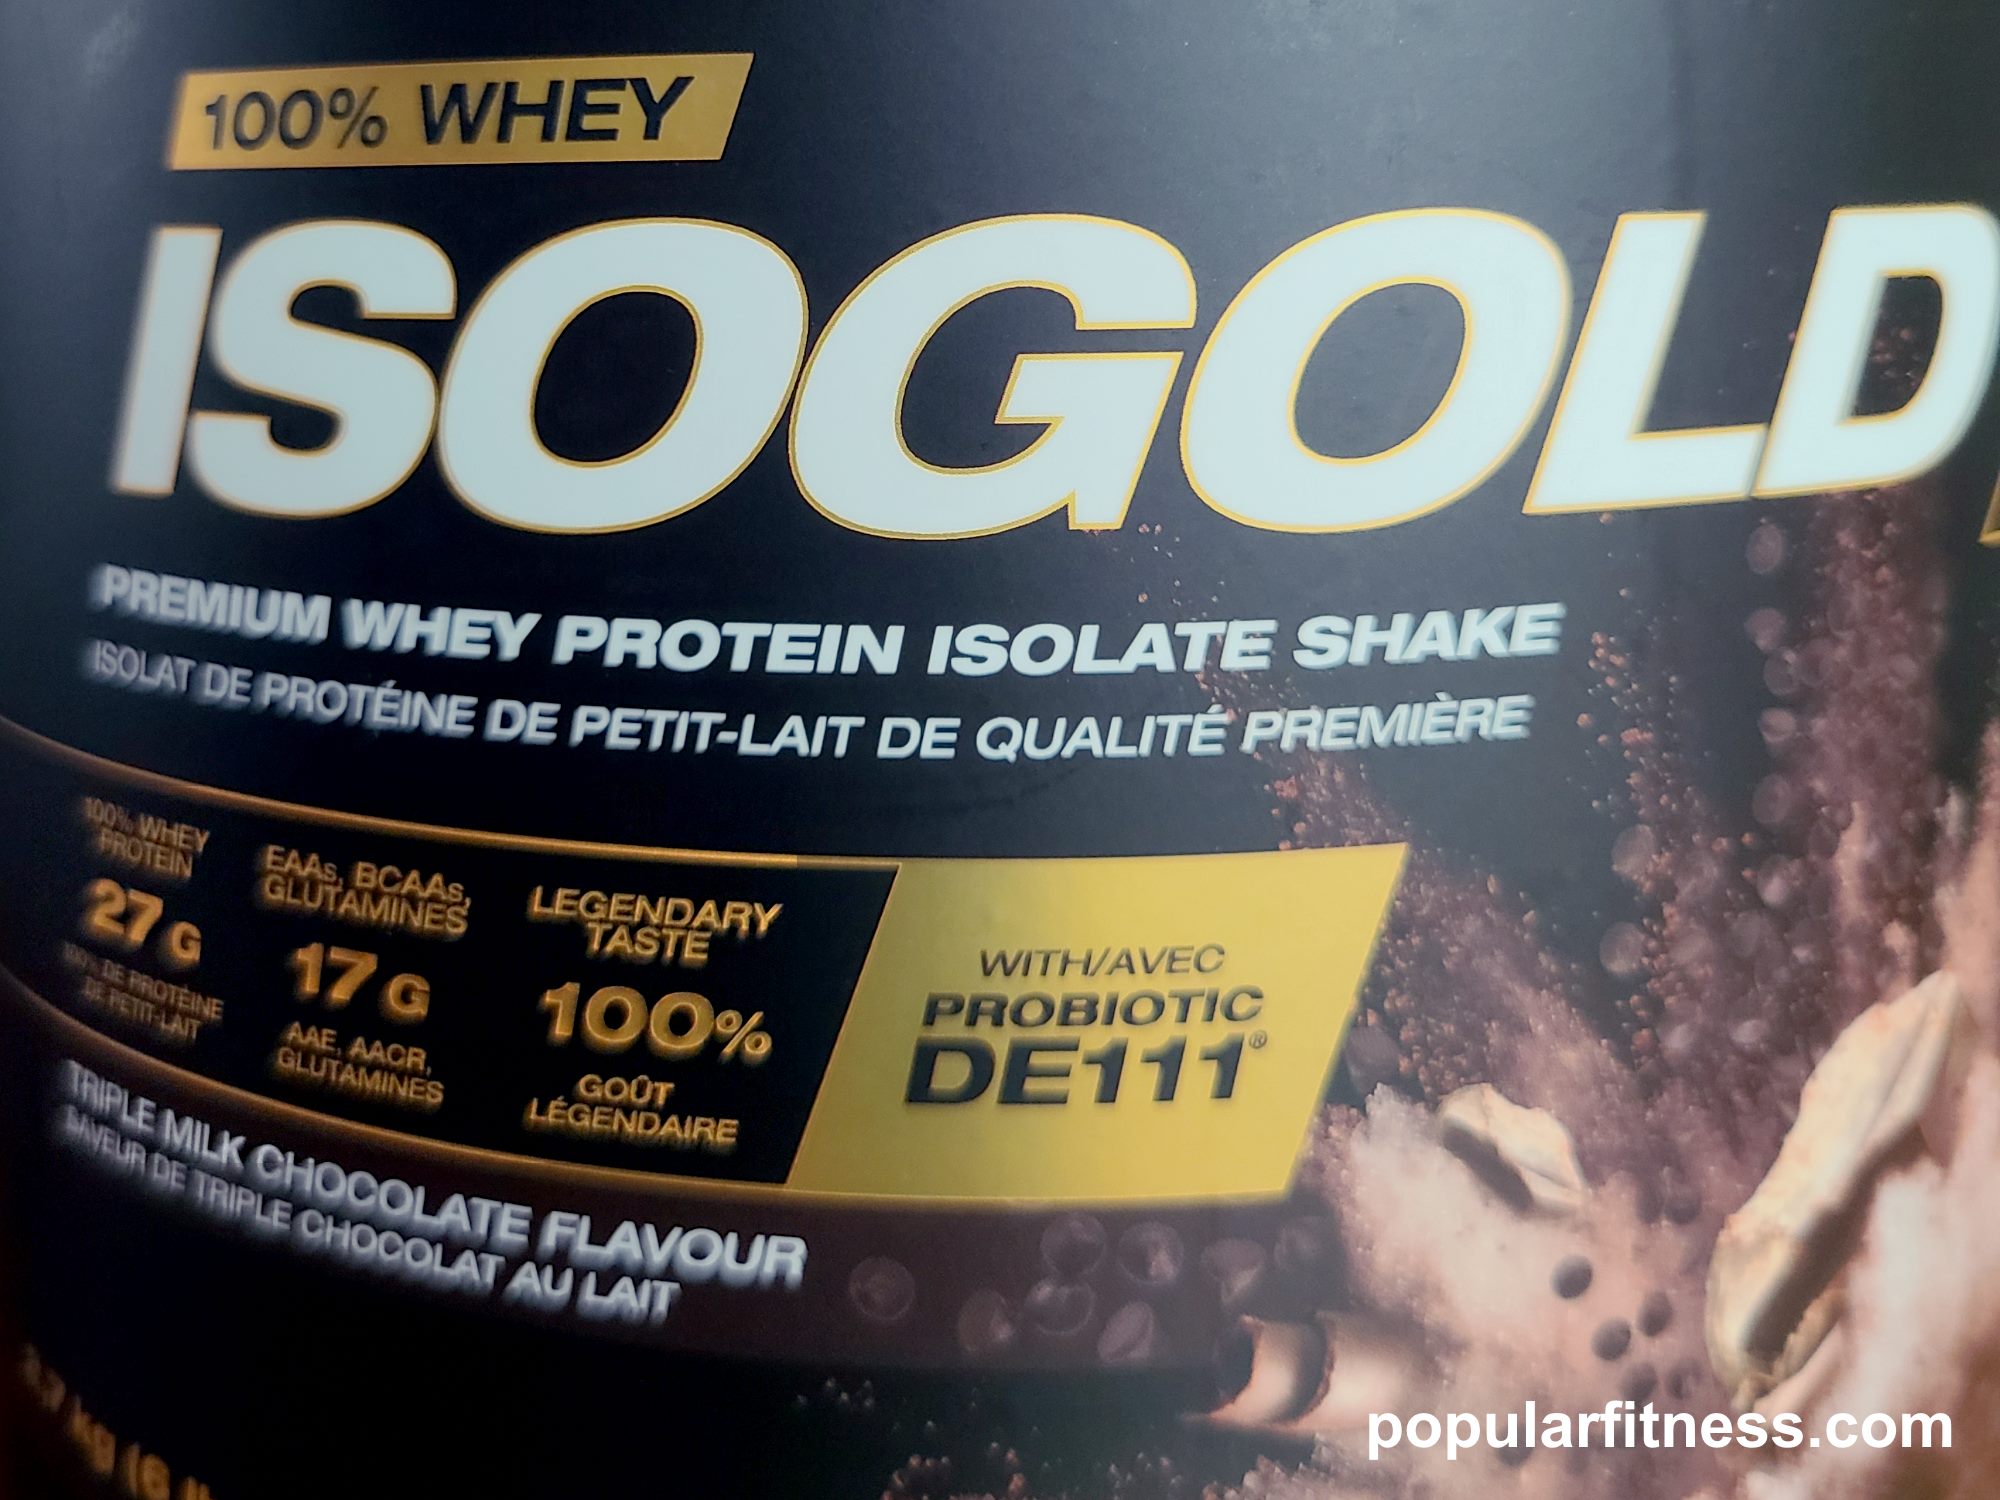 PVL ISOGOLD triple milk chocolate premium whey protein isolate powder supplement.